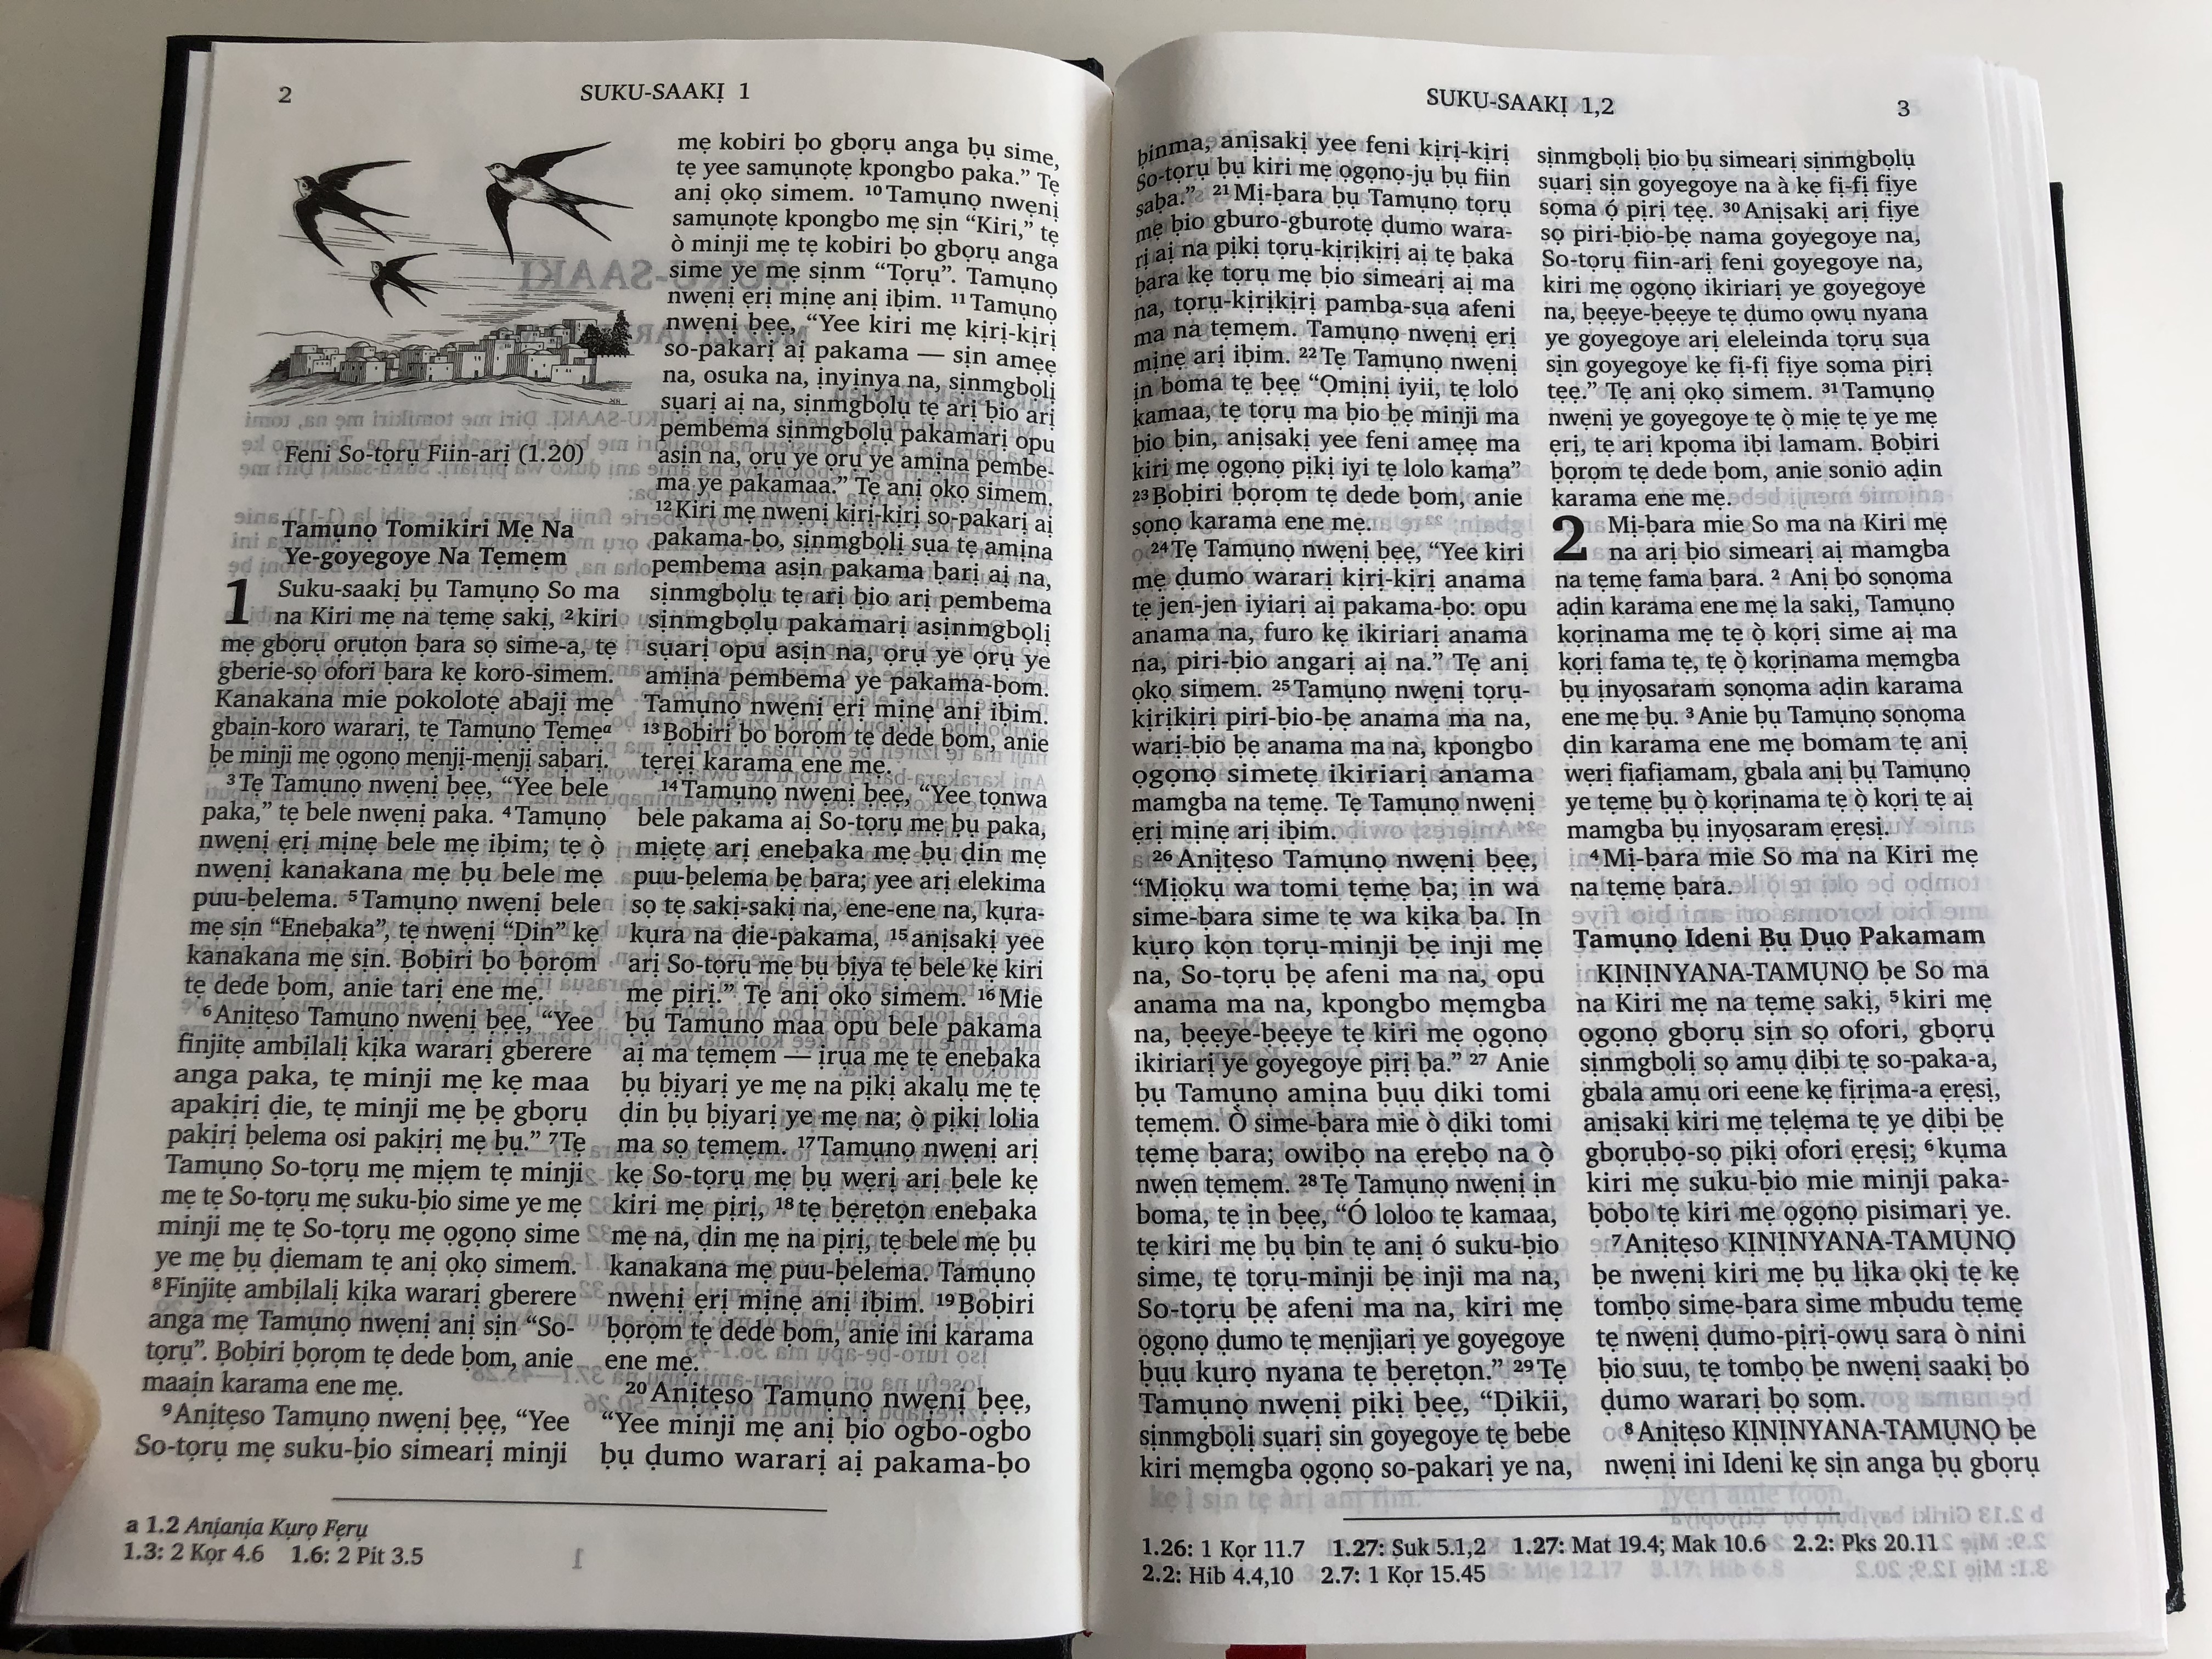 -fiafia-baibulu-the-holy-bible-in-kalabari-language-bible-society-of-nigeria-2017-hardcover-black-kalabari-common-language-bible-9-.jpg